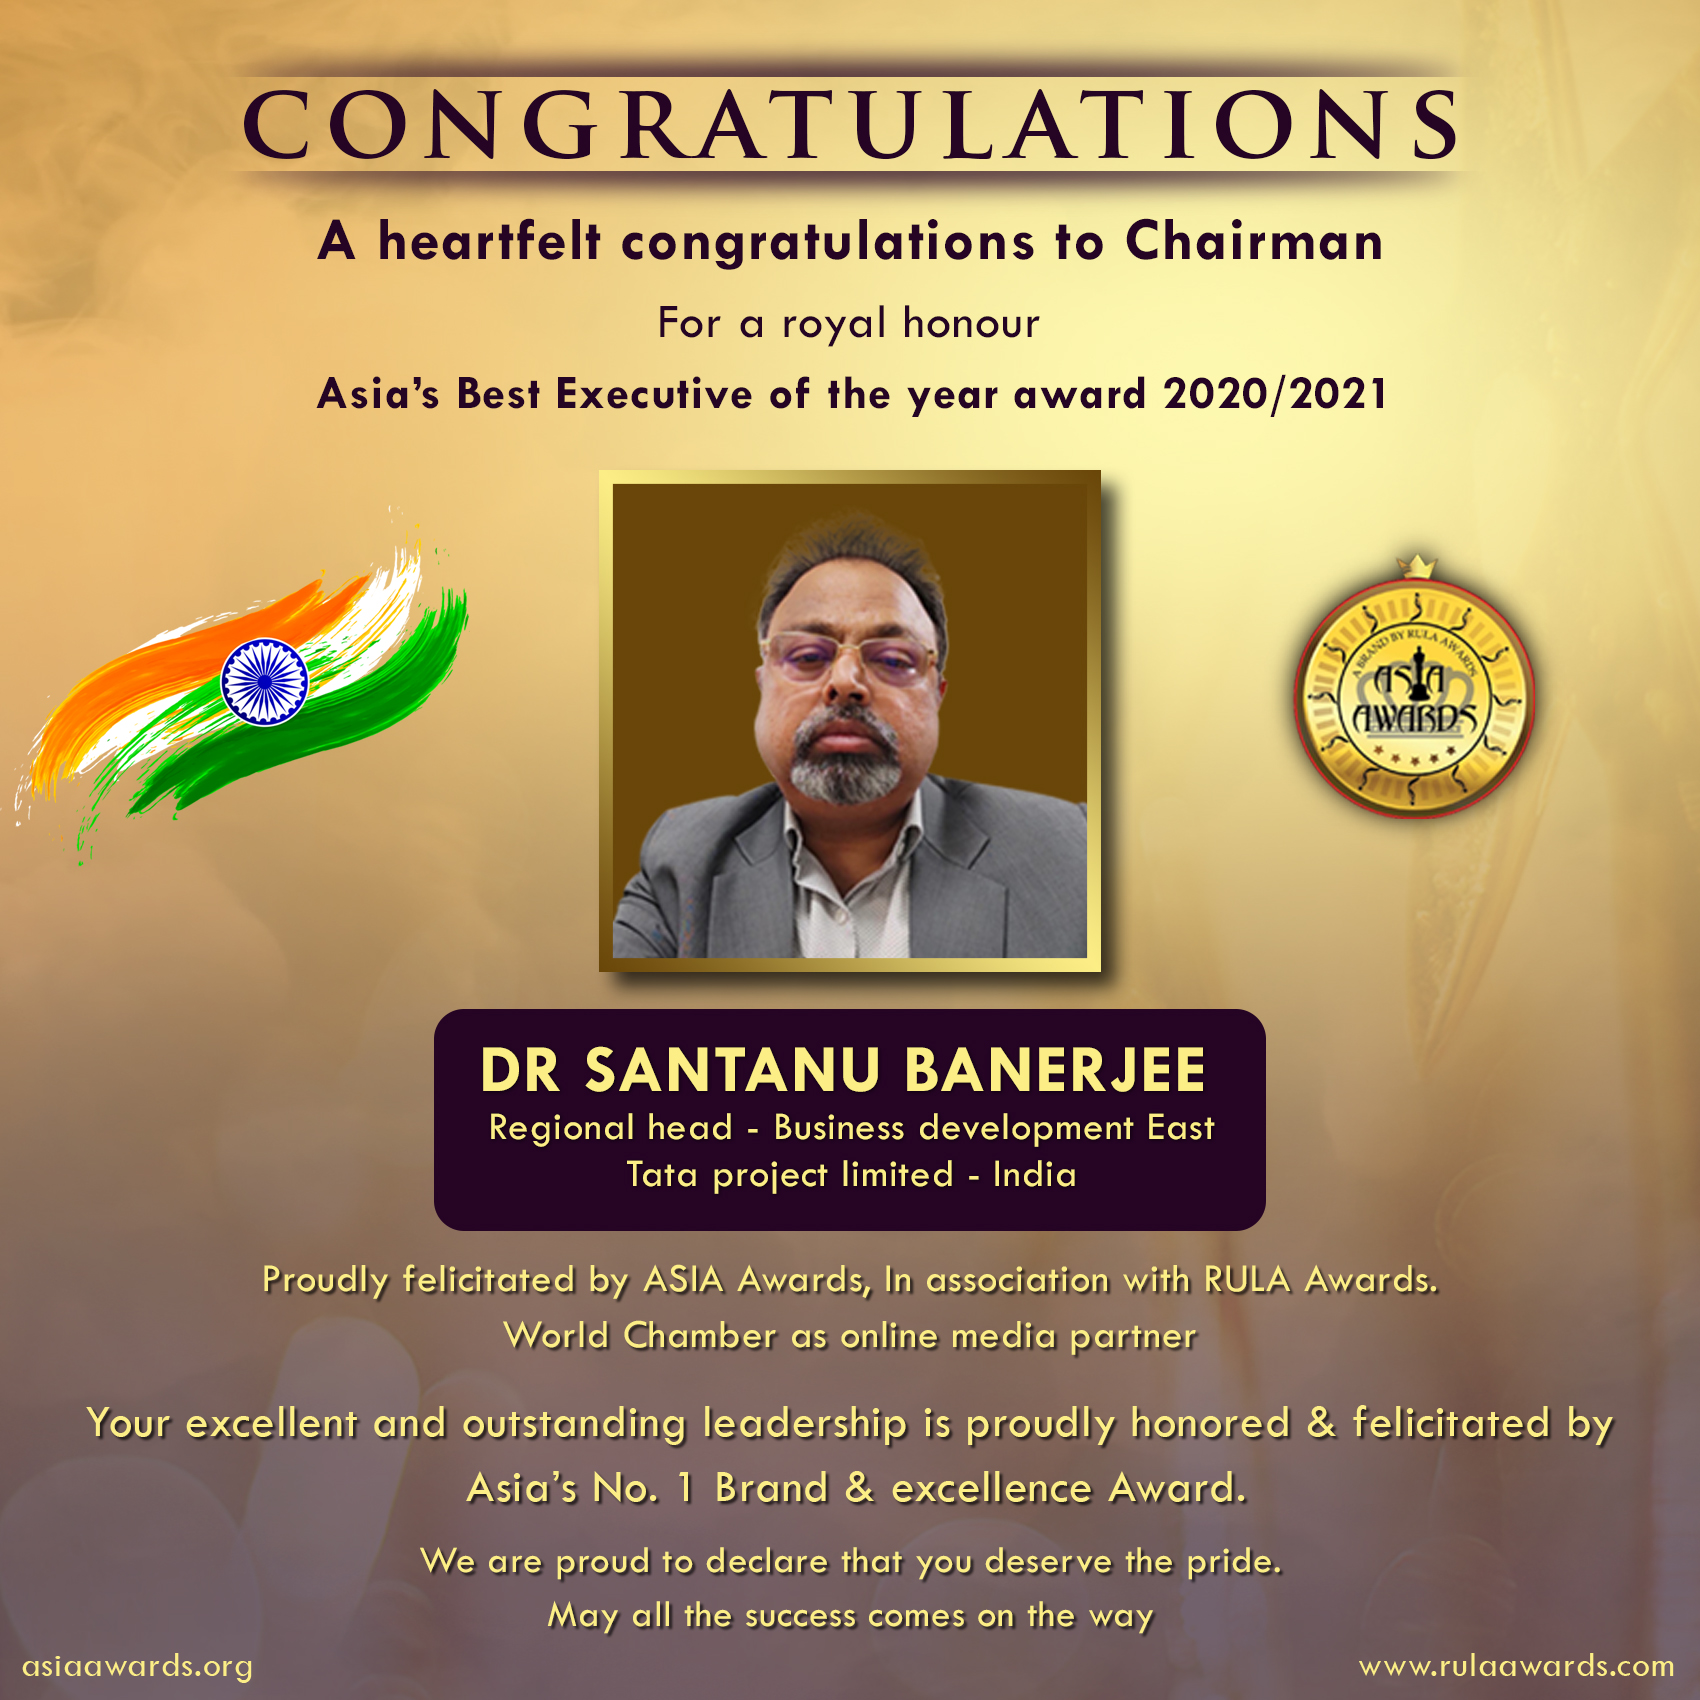 Dr Santanu banerjee has bagged Asia's Best Executive Award of the year